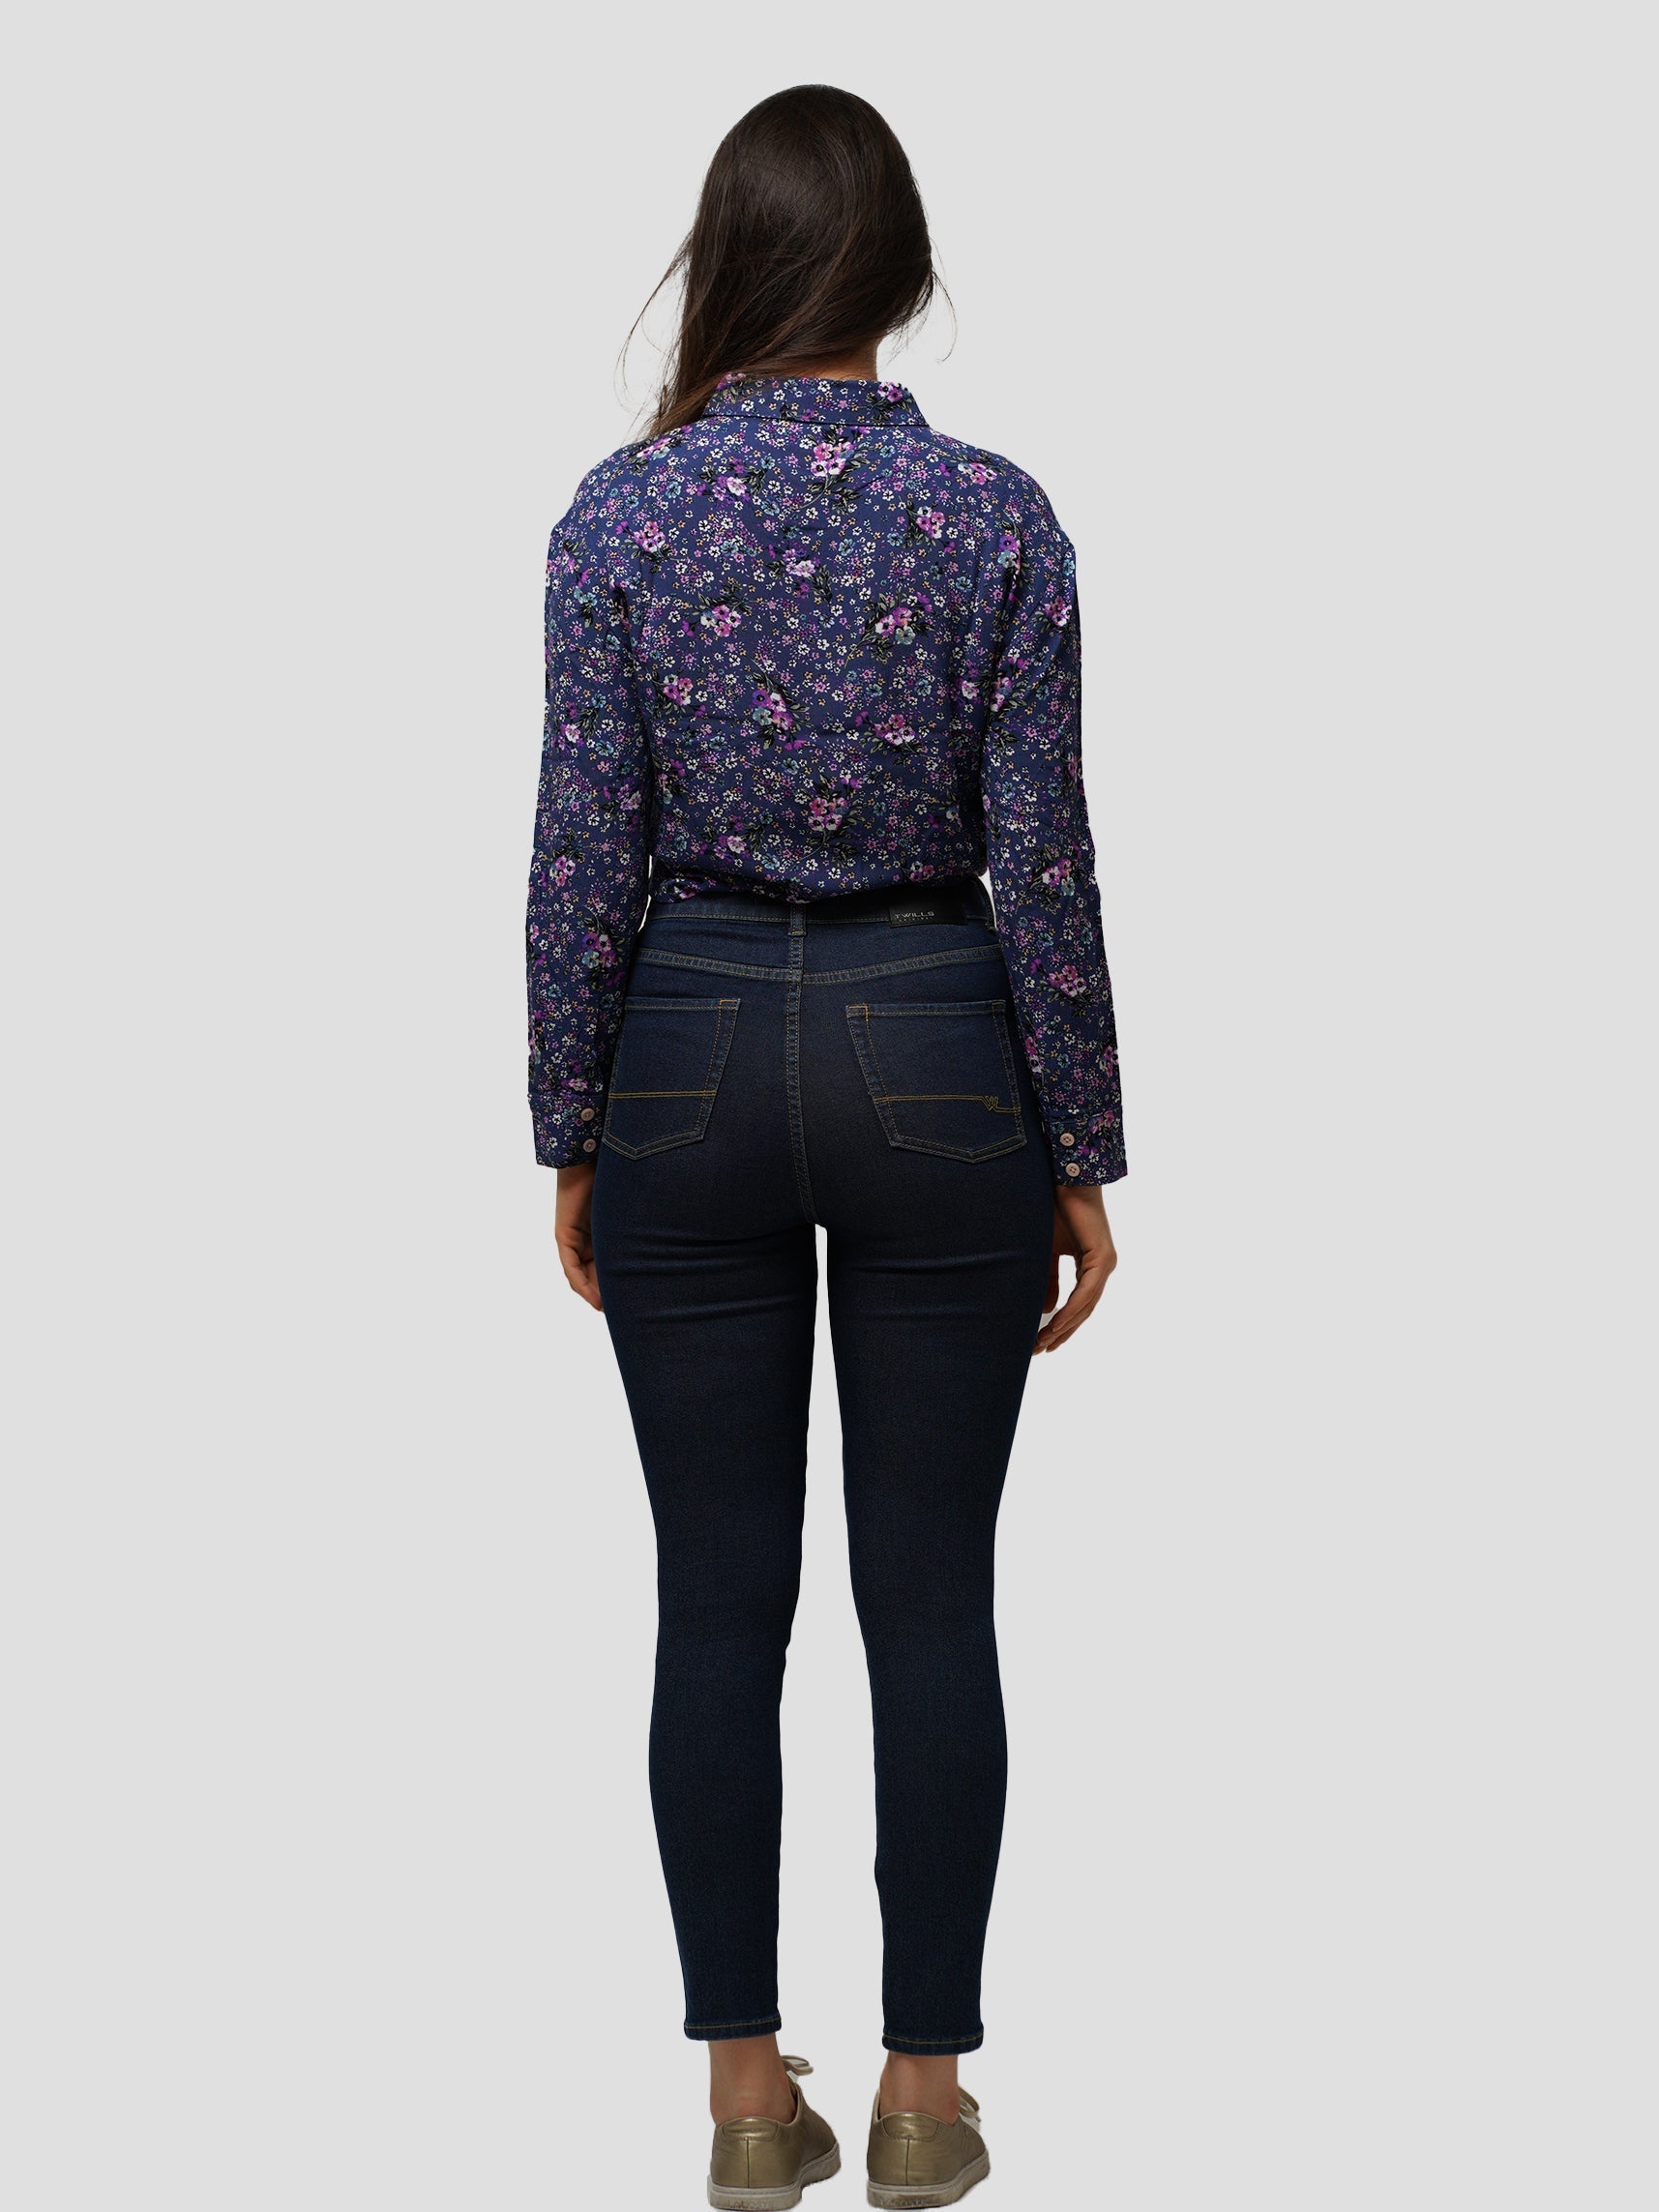 Women's Casual Full Sleeves print Crop Top Shirt - inteblu